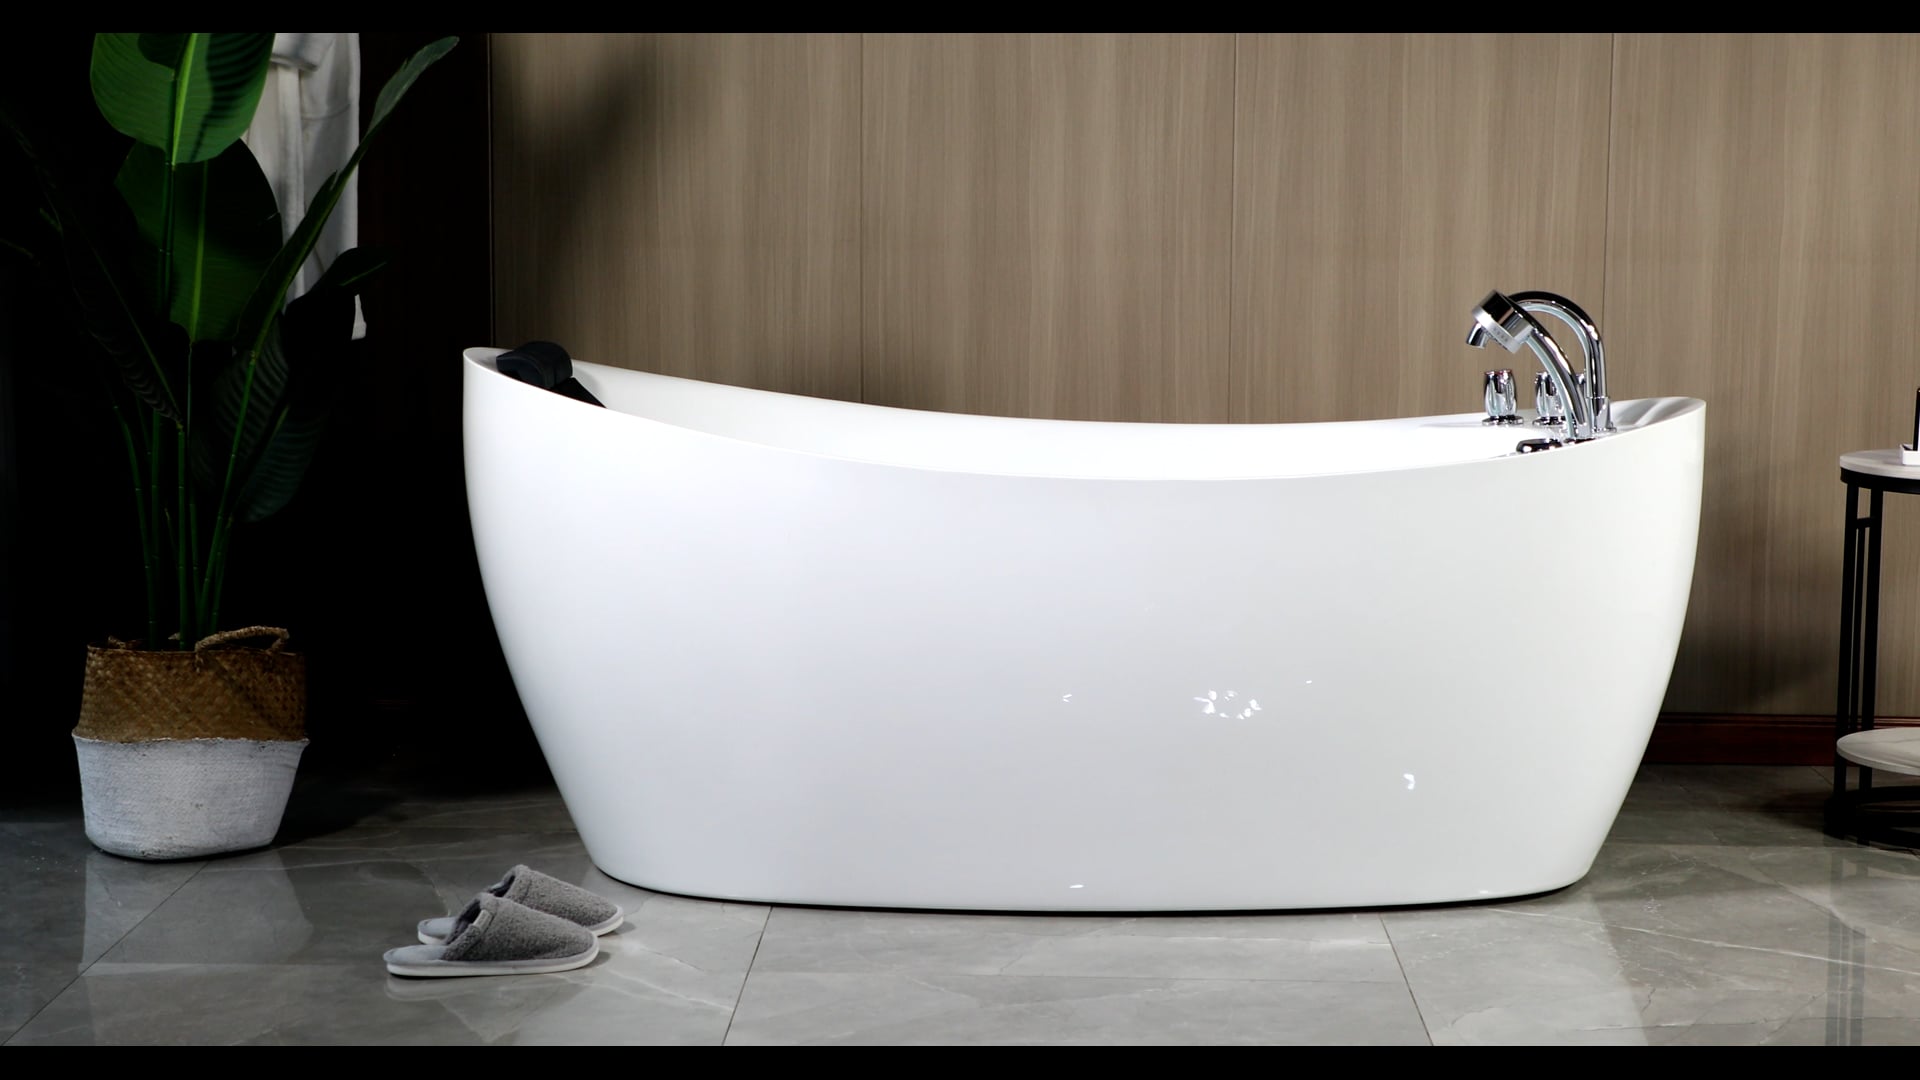 67" L x 31" W Freestanding Whirlpool BathTub Right Drain White